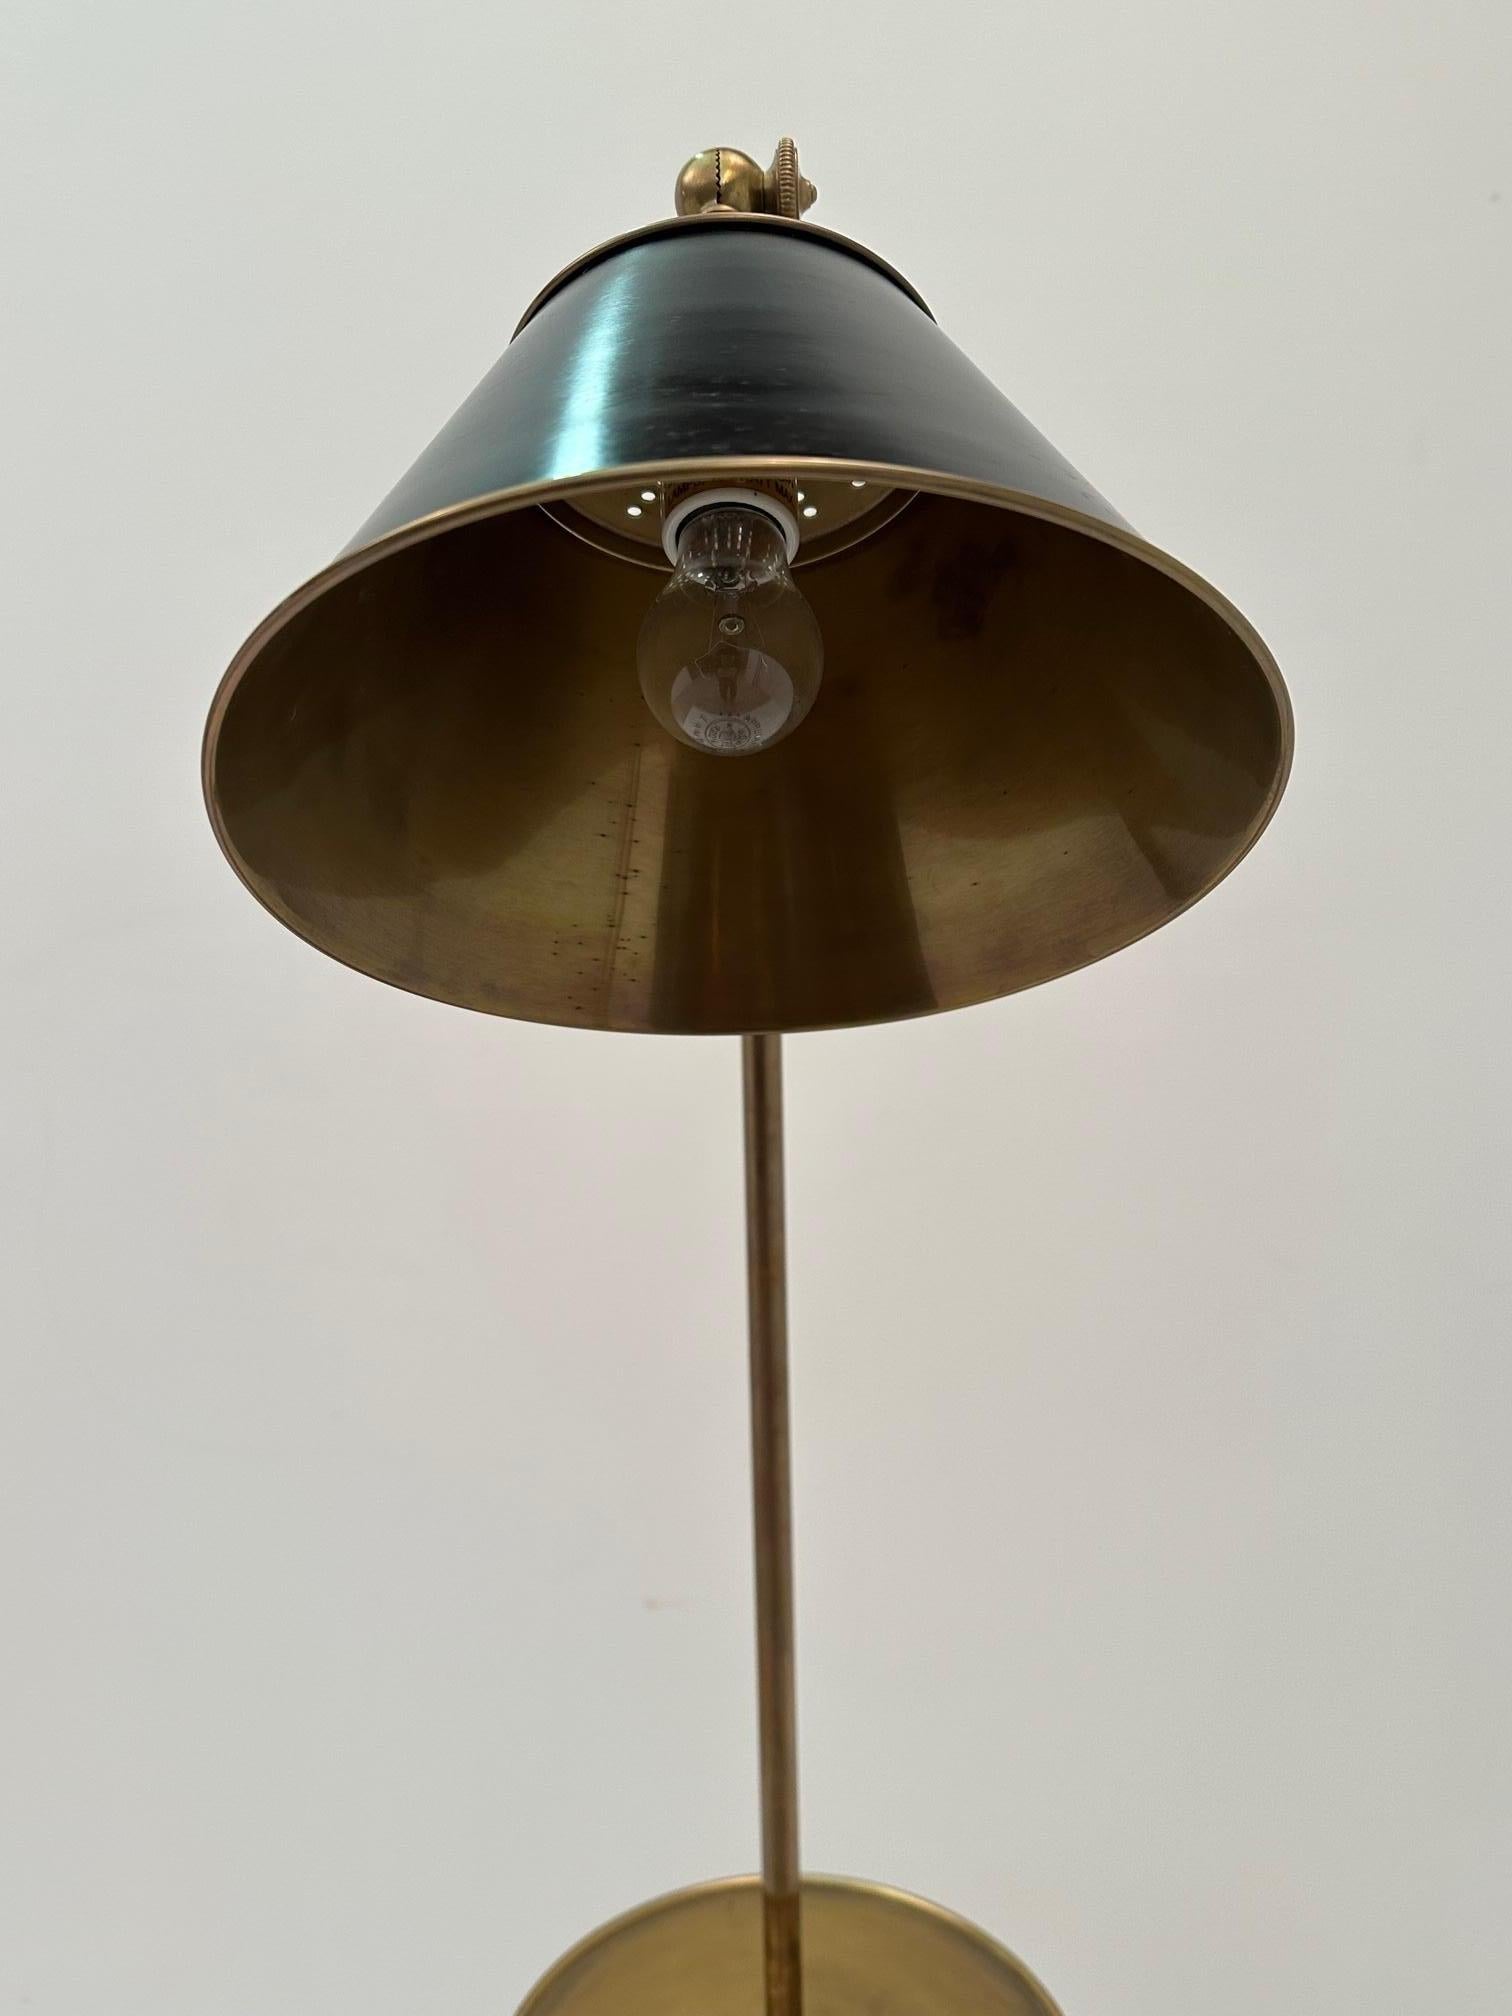 Stunning Chapman Brass Floor Lamp with Adjustable Shade 1